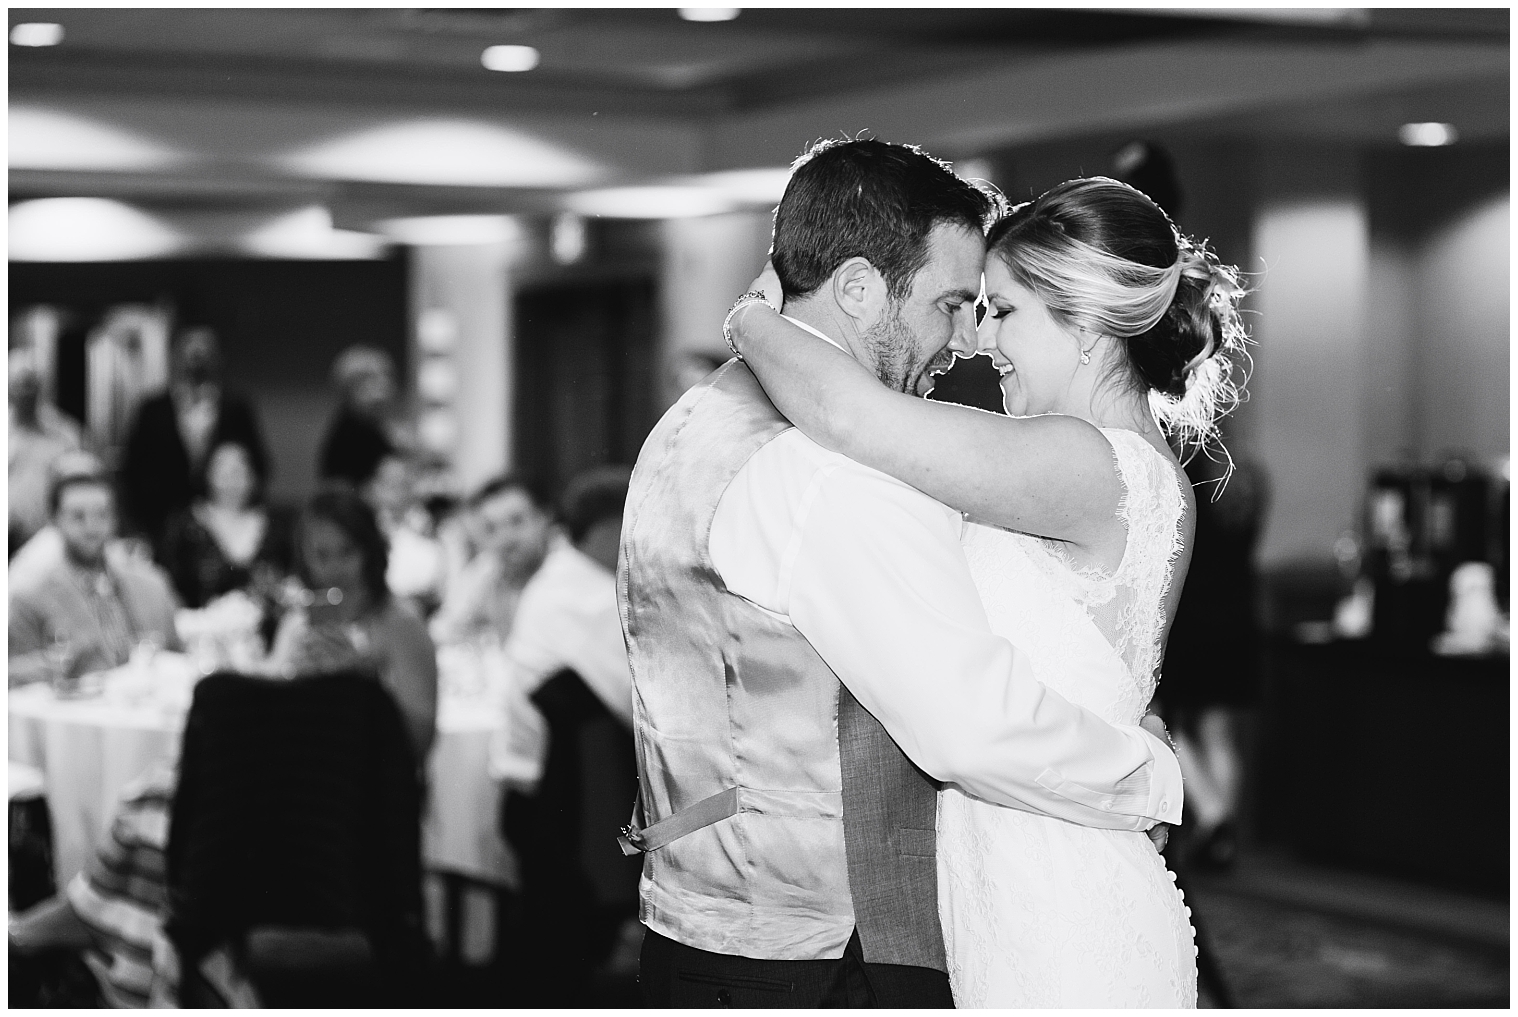 The wedding couple share their first dance at their Breckenridge wedding reception.